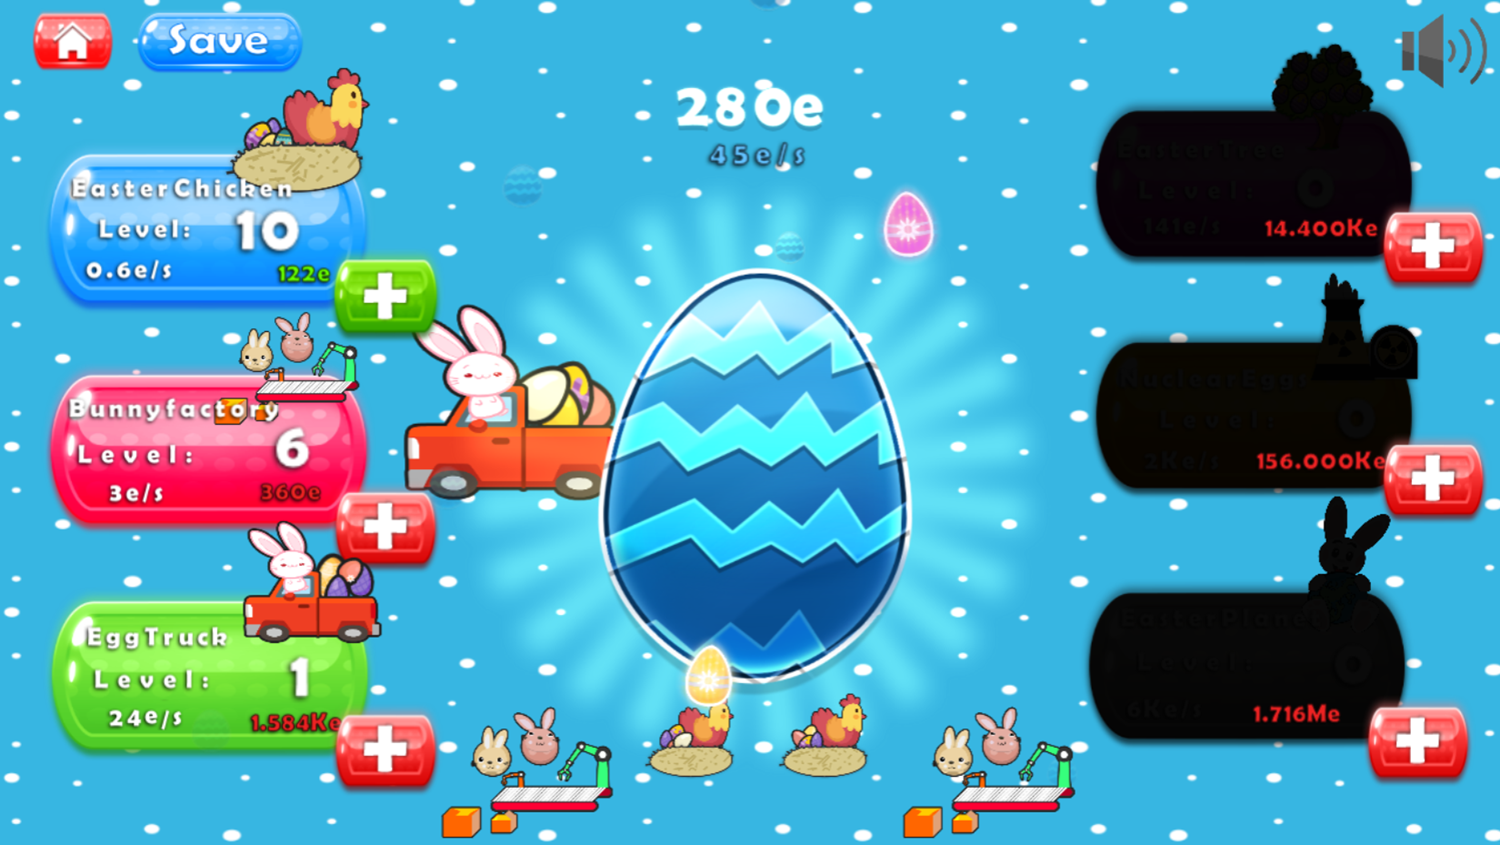 Easter Clicker Game Egg Truck Unlocked Screenshot.